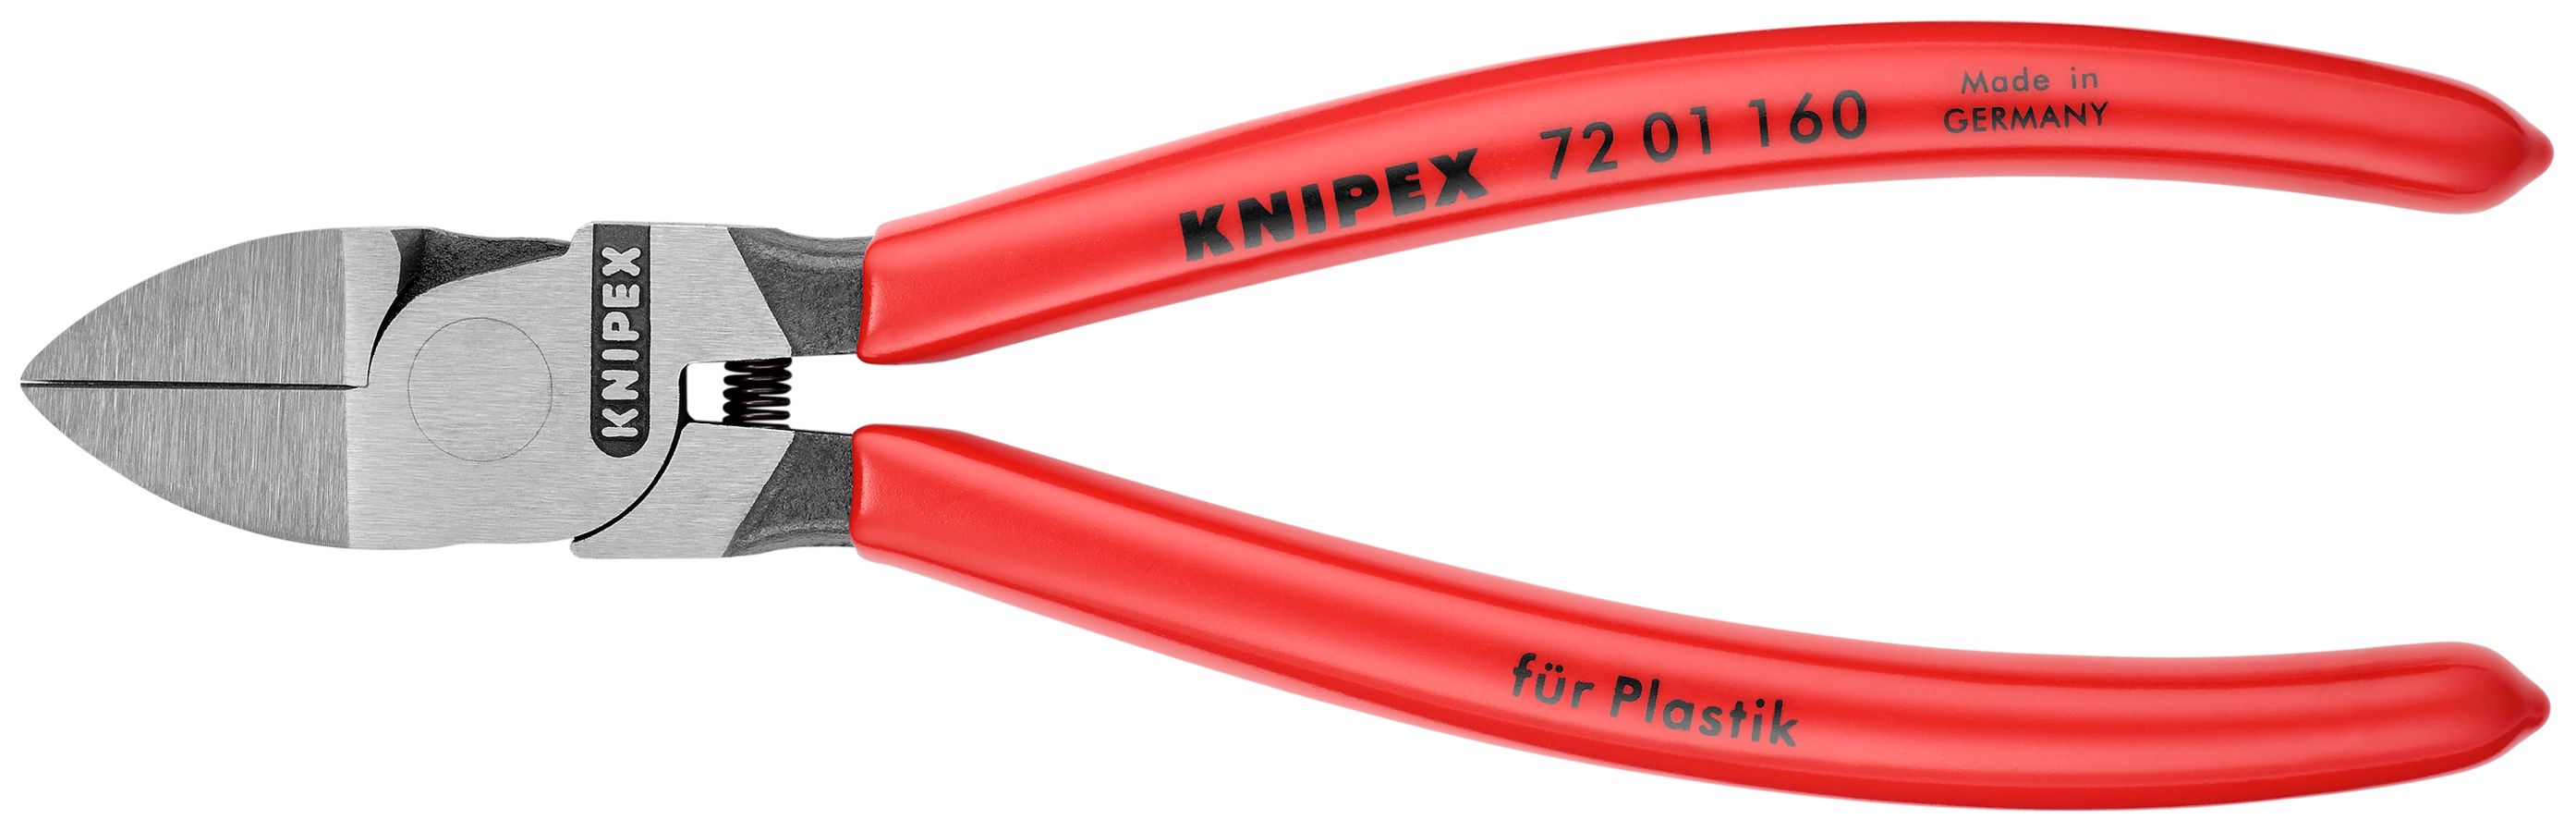 Diagonal Pliers for Flush Cutting Plastics | KNIPEX Tools